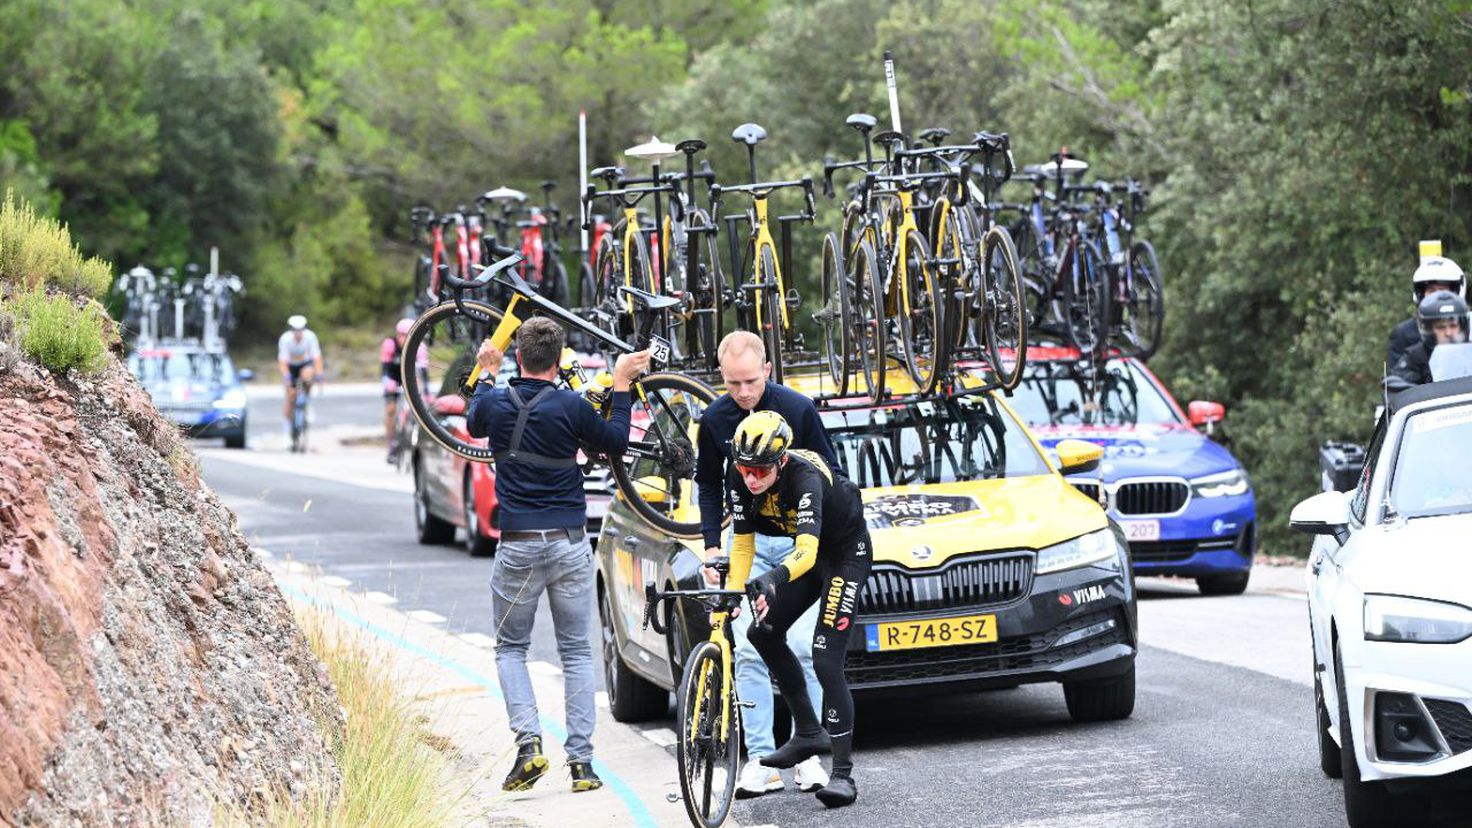 Numerous punctures at La Vuelta due to tacks

